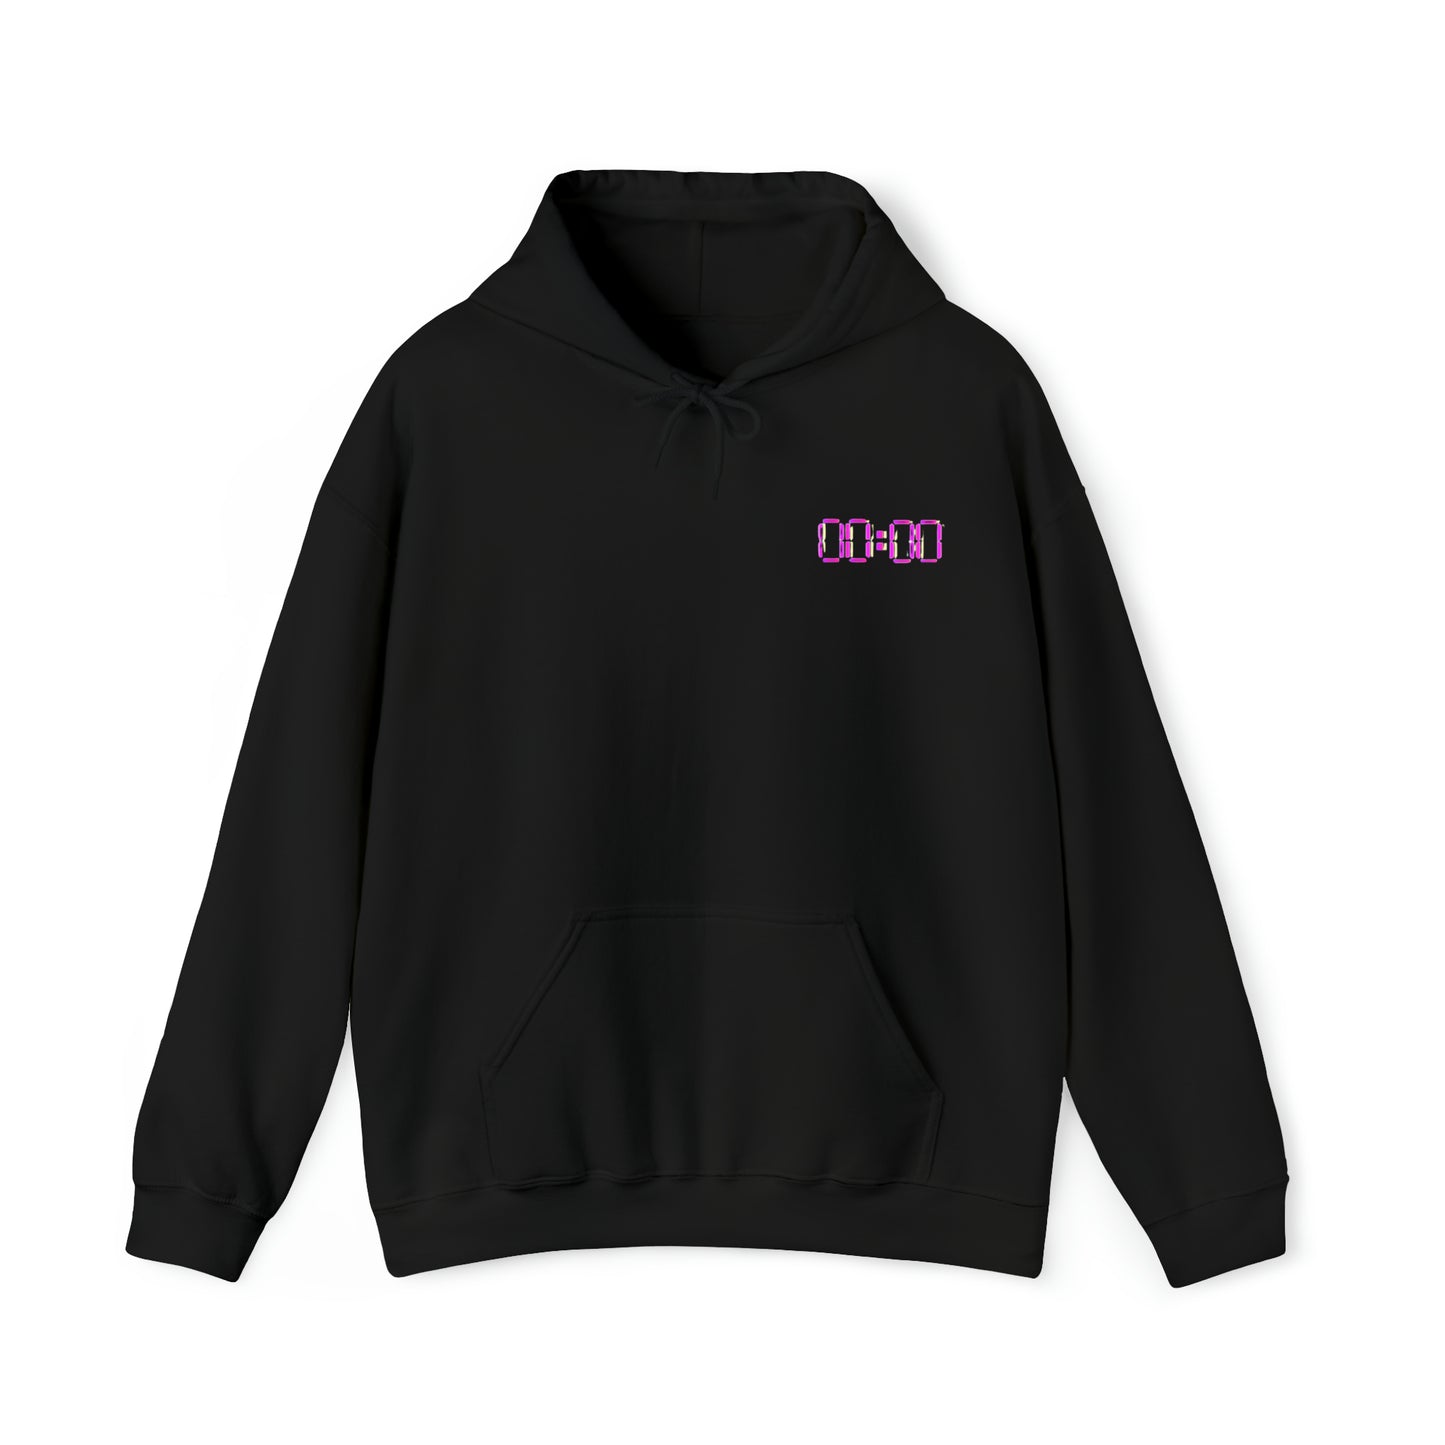 Zero O'clock pullover hoodie 00:00